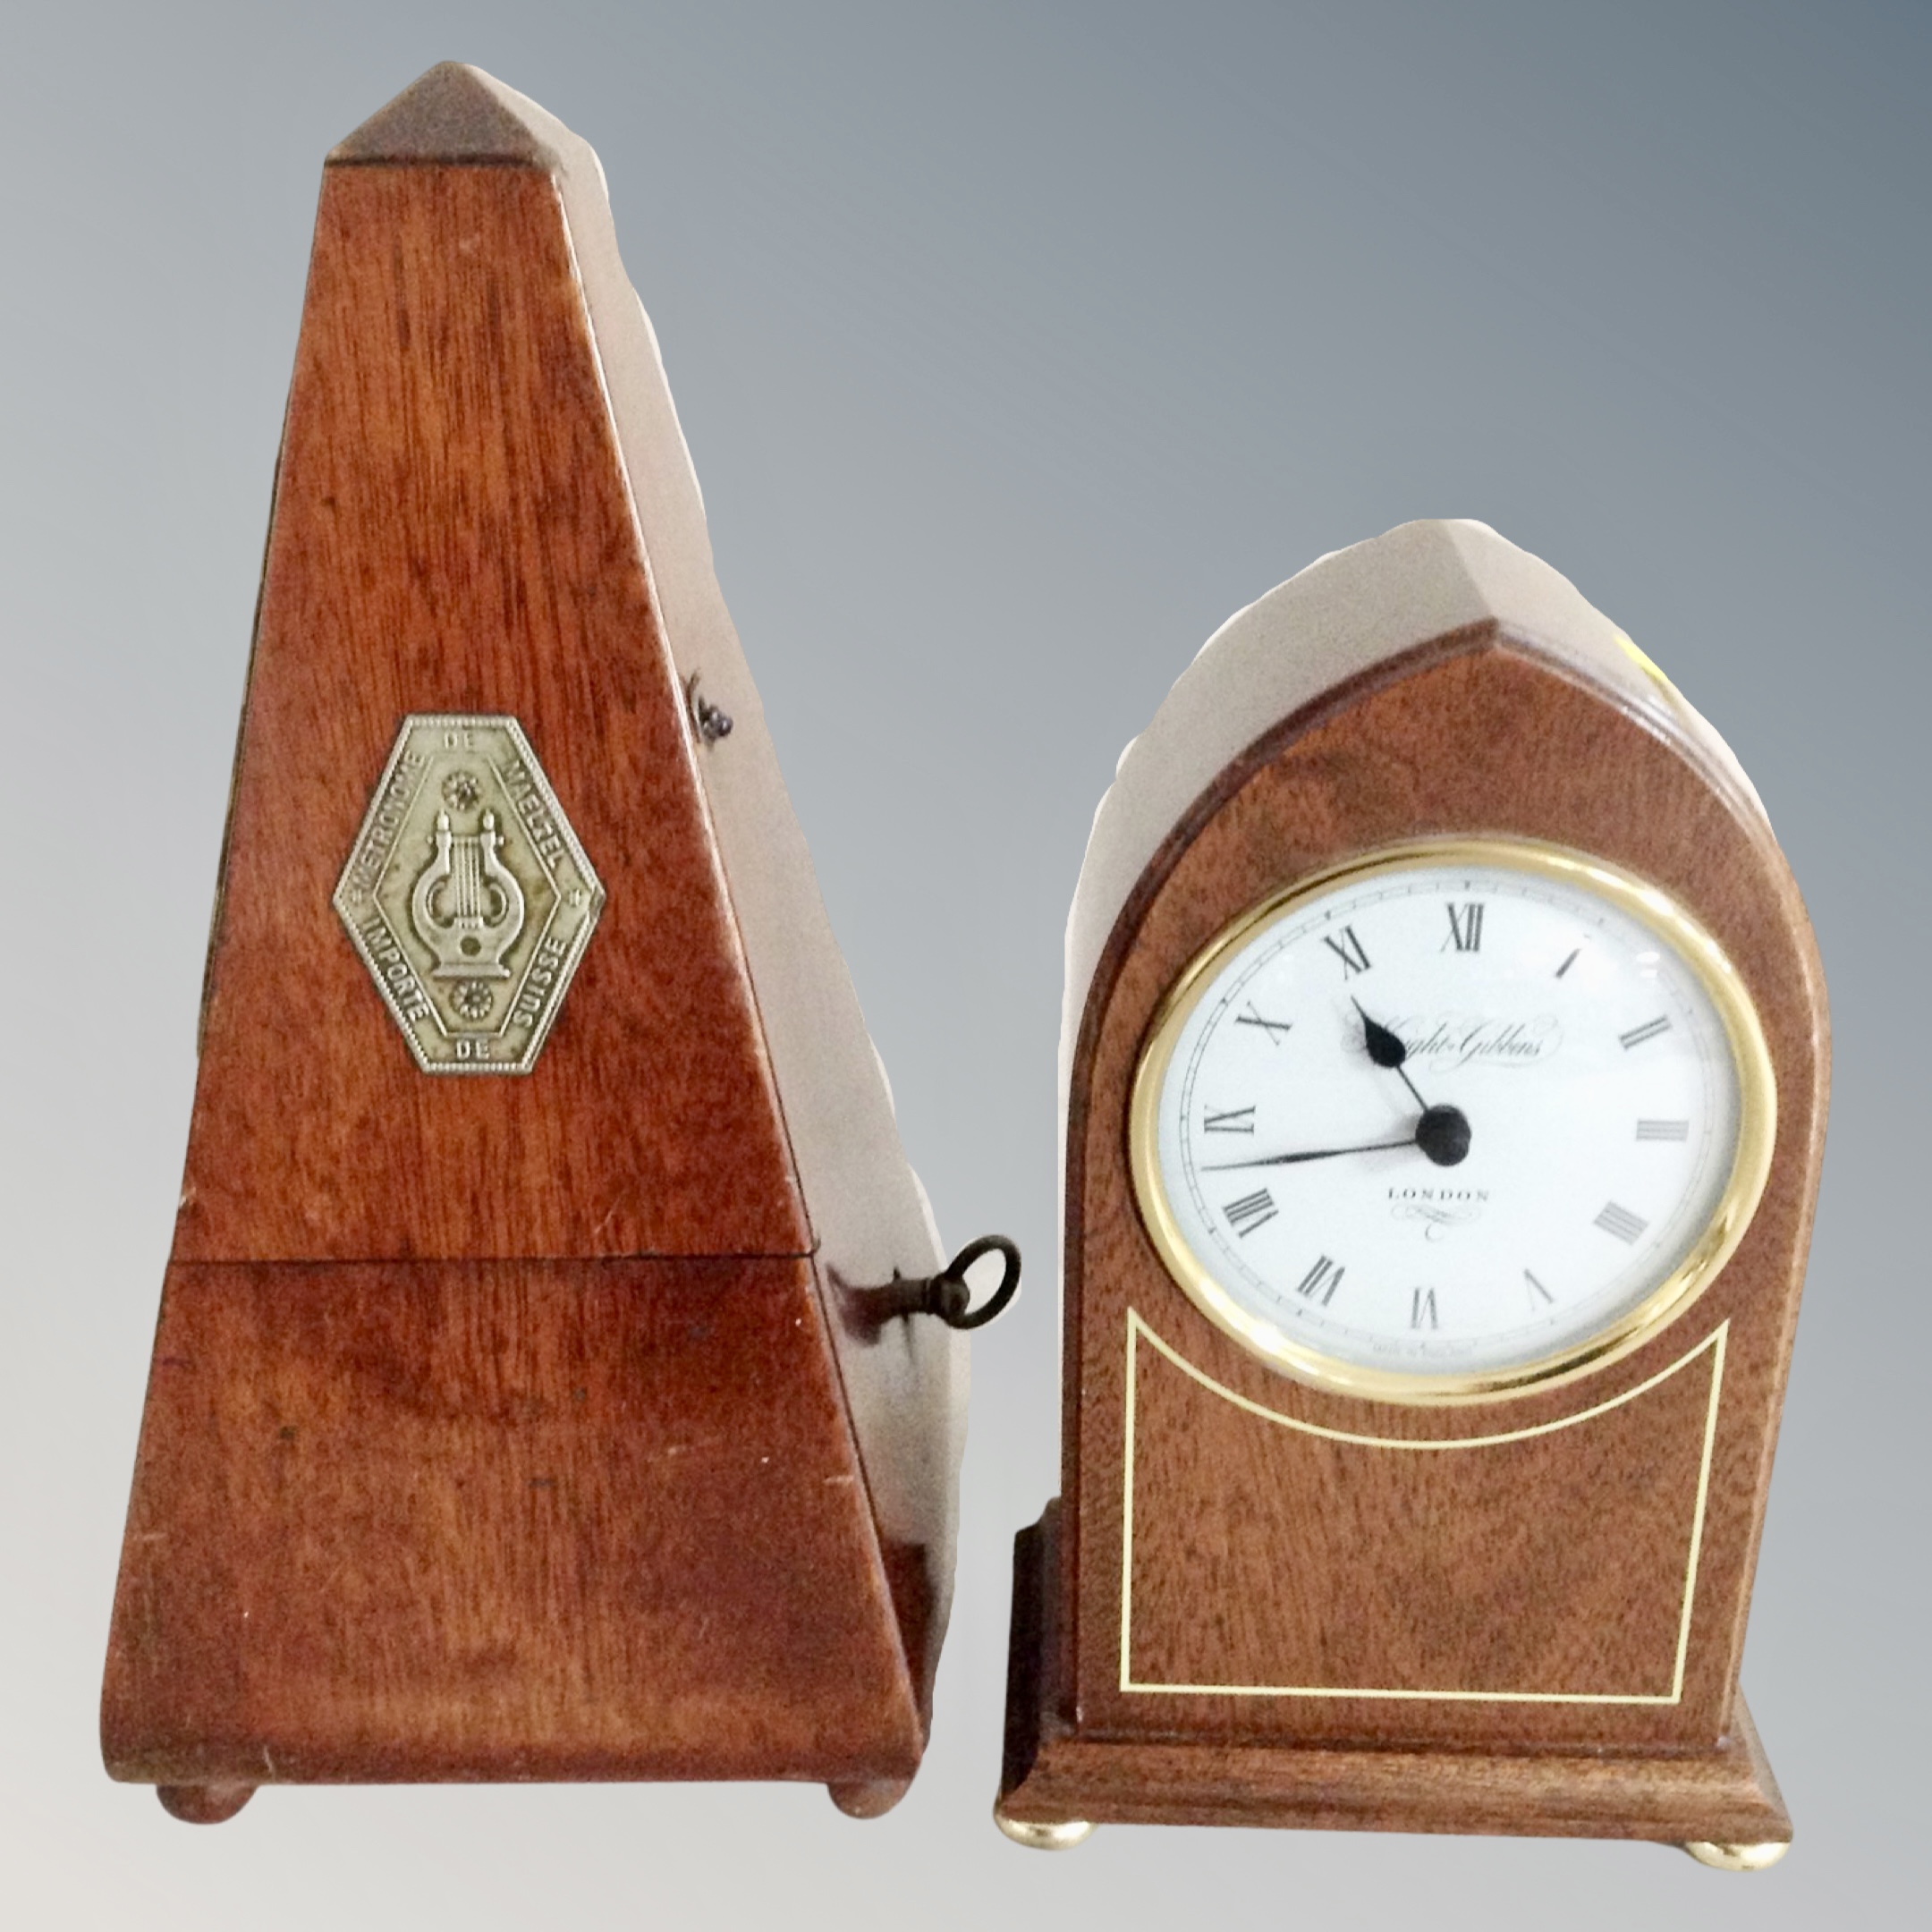 A Maelzel metronome and a battery mantel clock